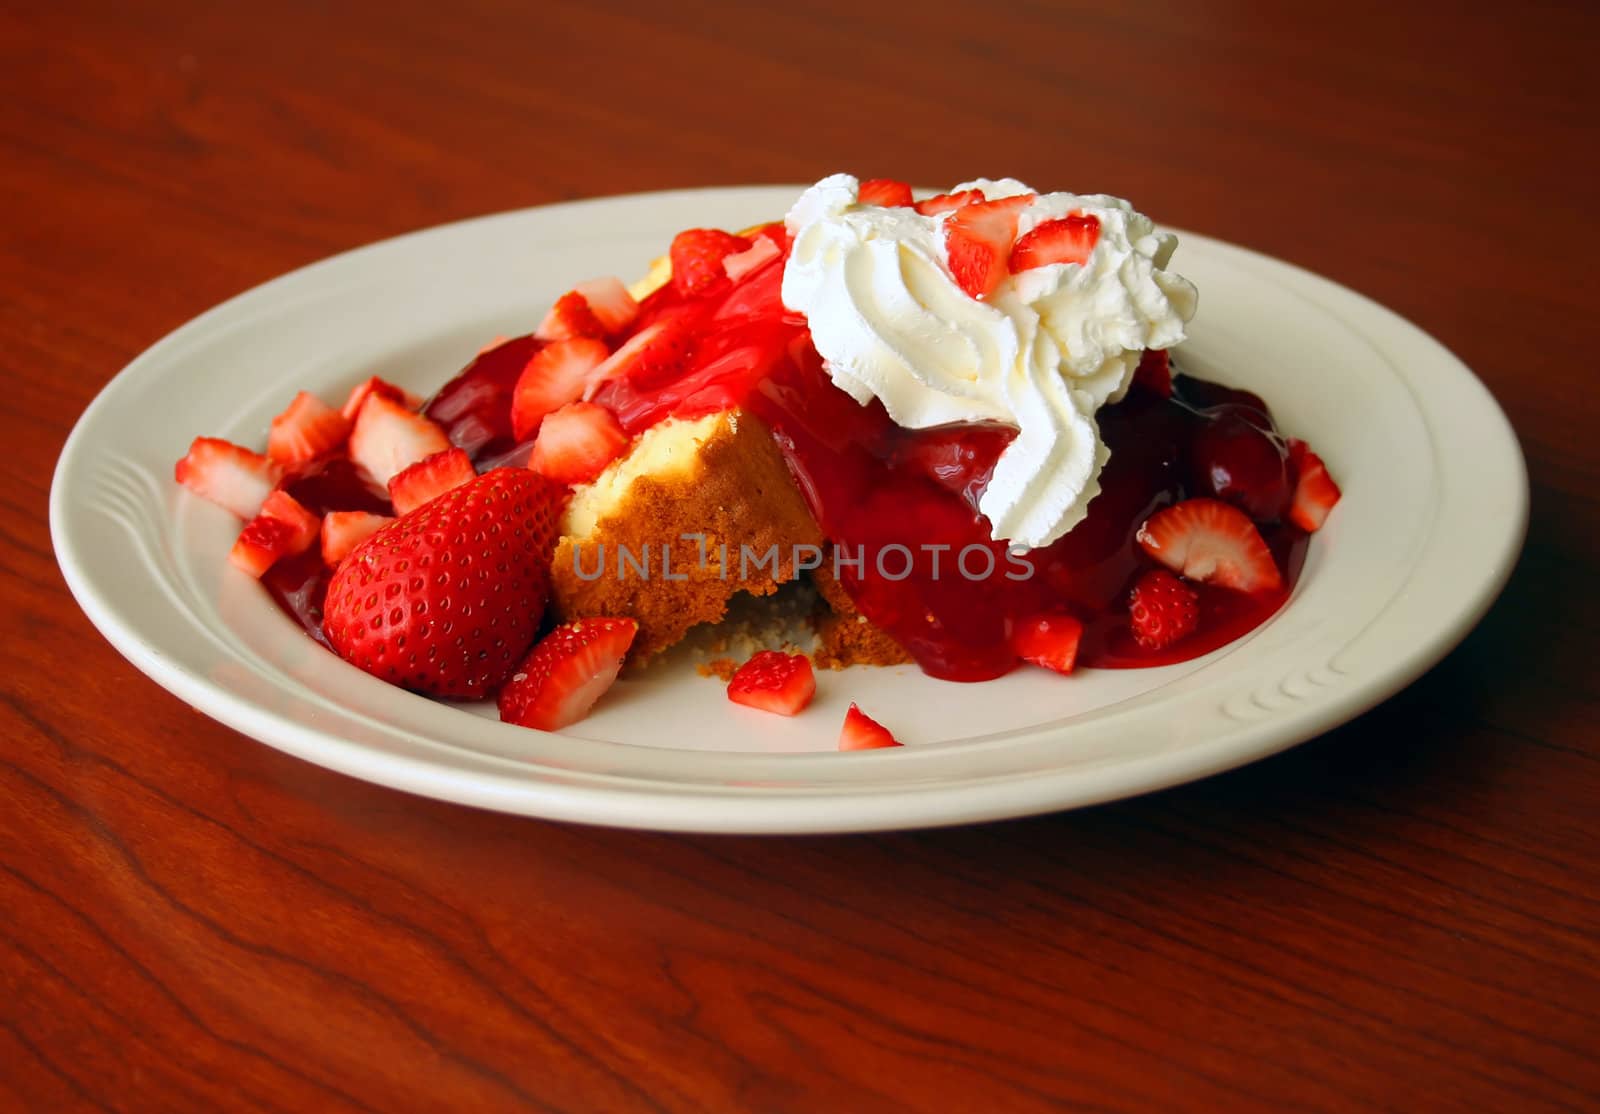 Strawberry Short Cake by thephotoguy